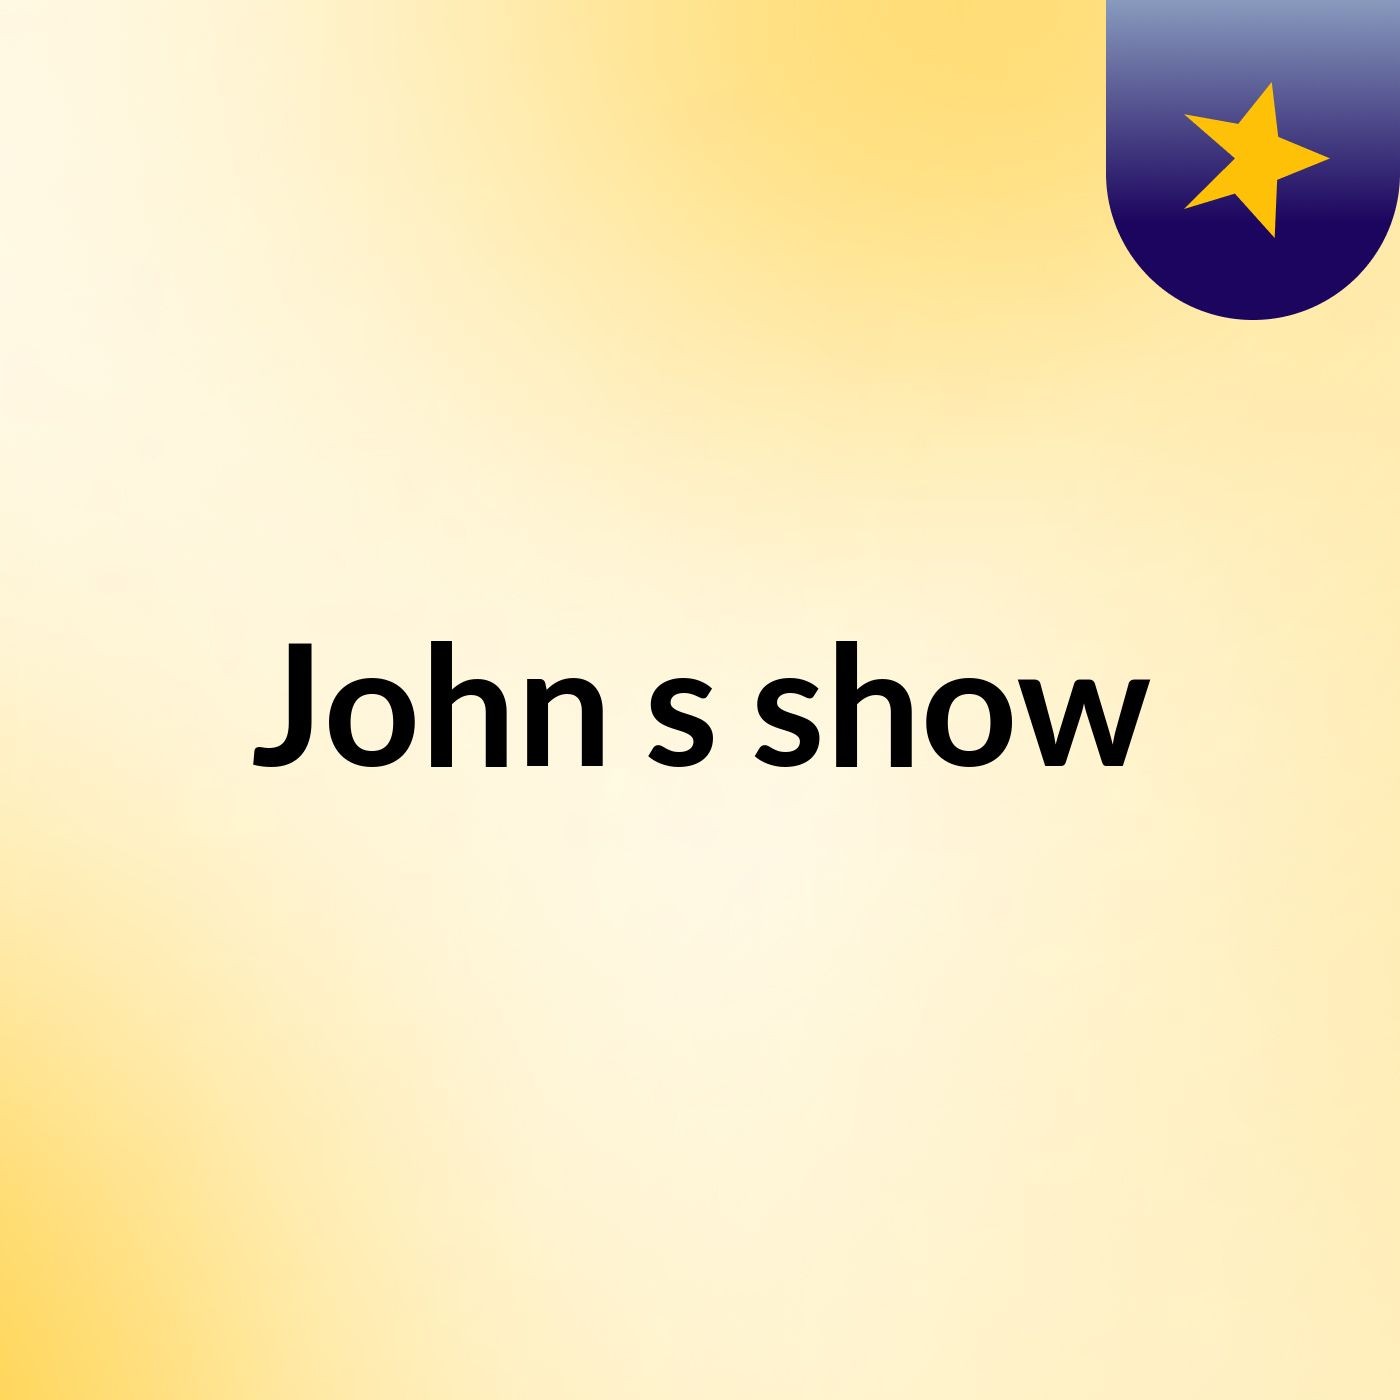 John's show